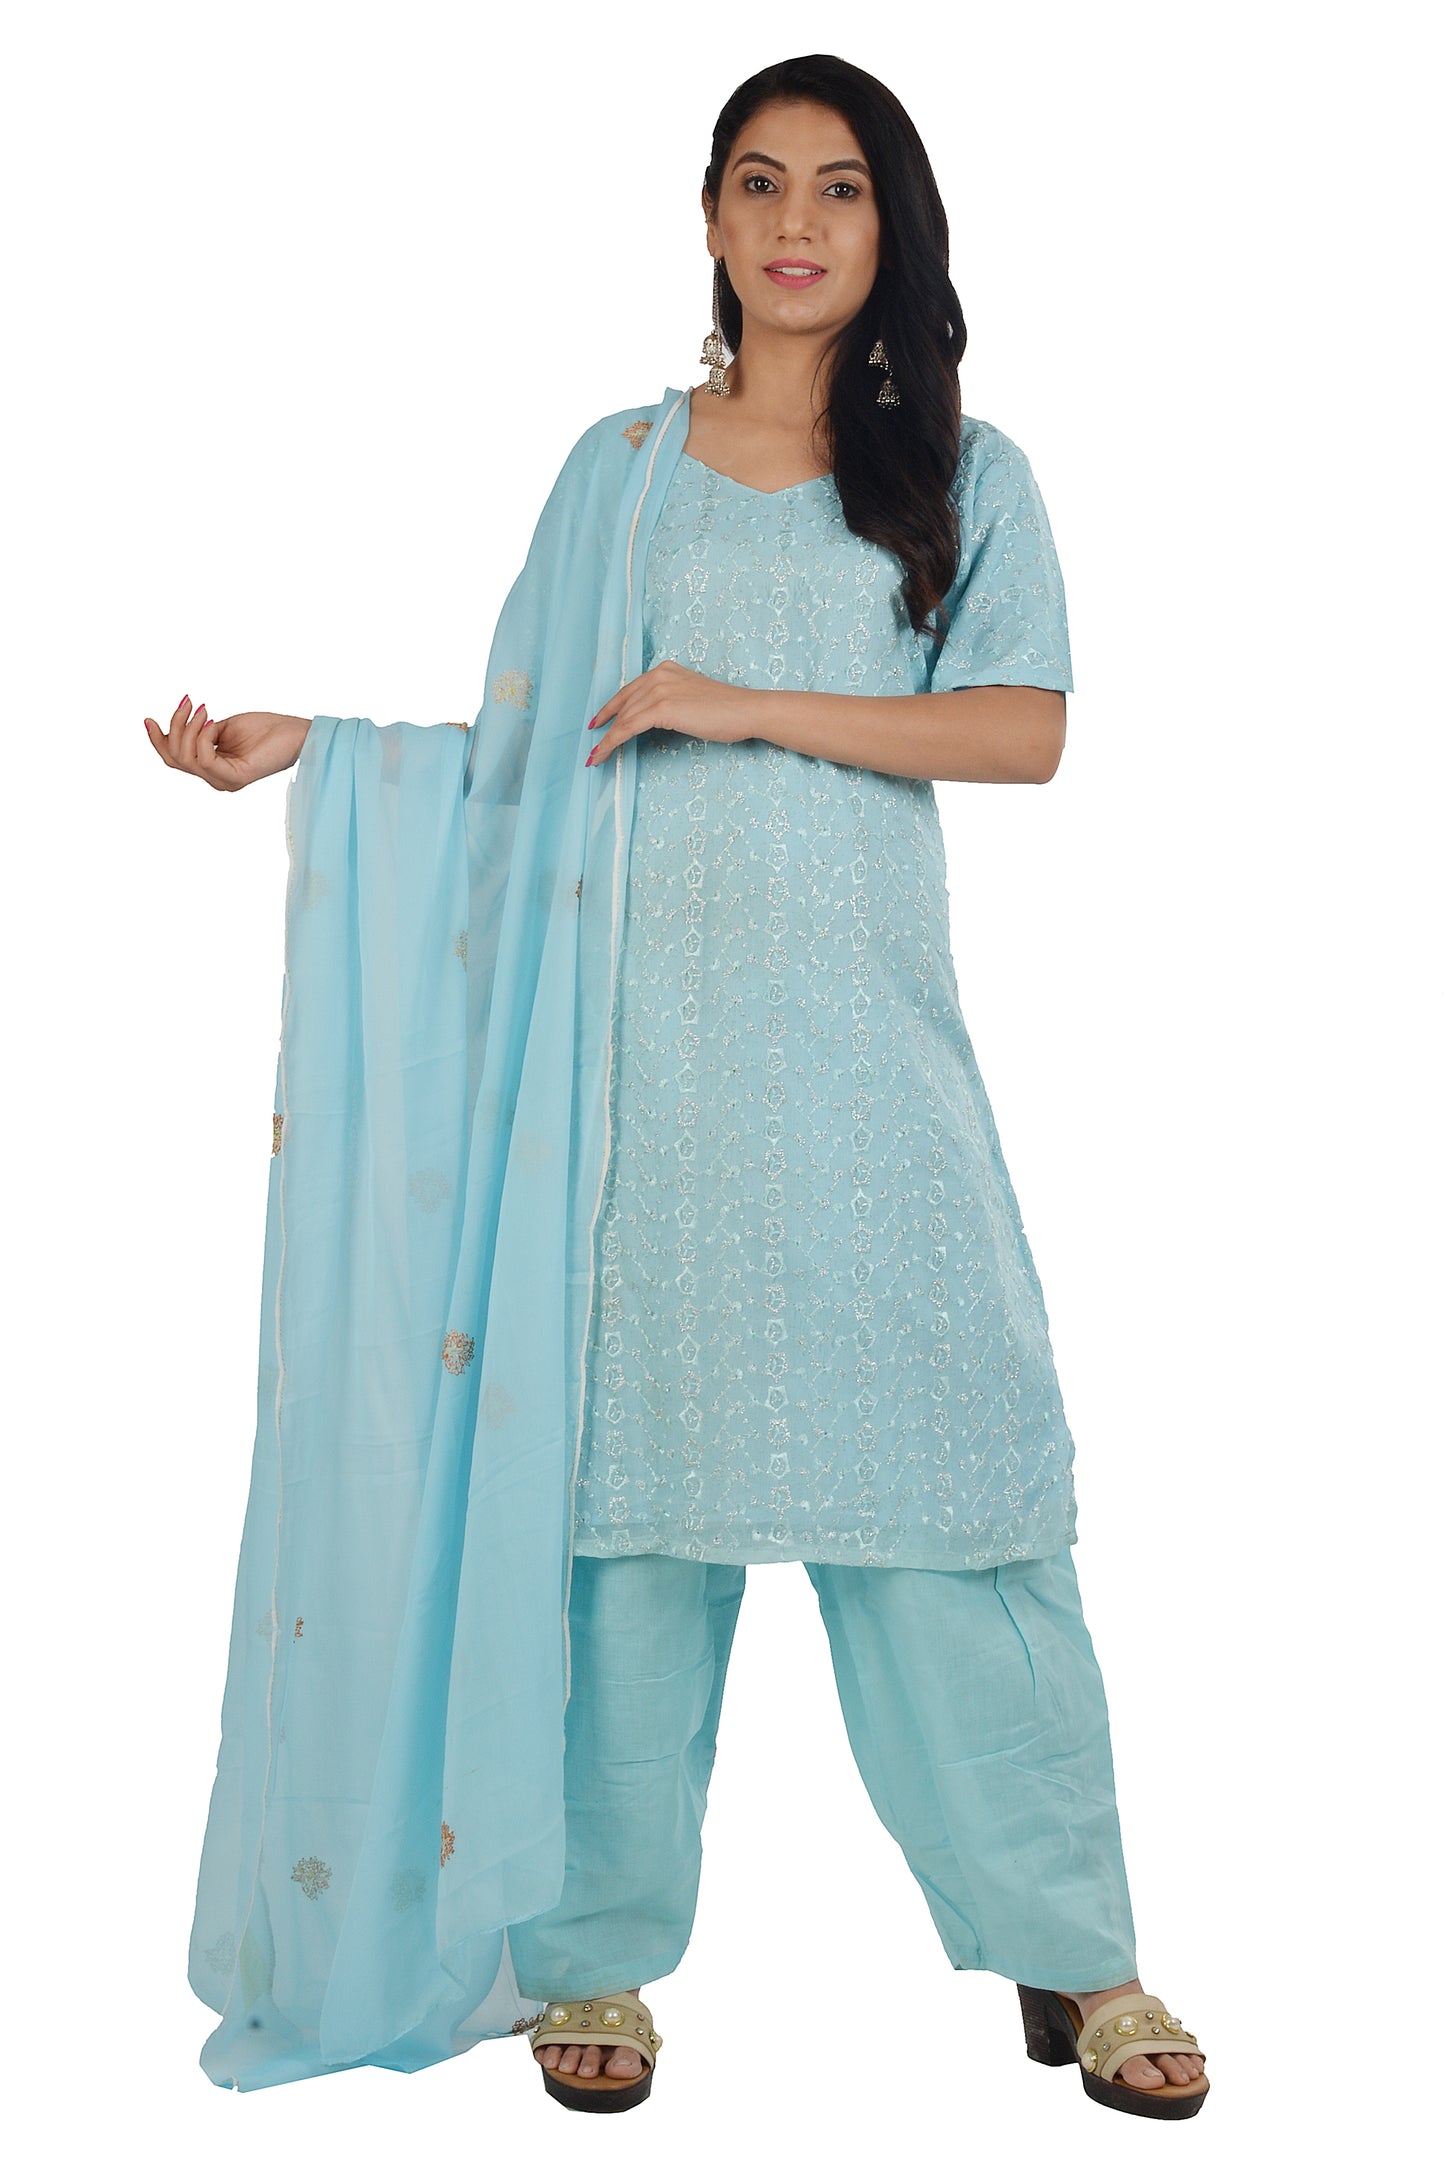 Blue wear Formal Salwar kameez Dress Chest Size 46